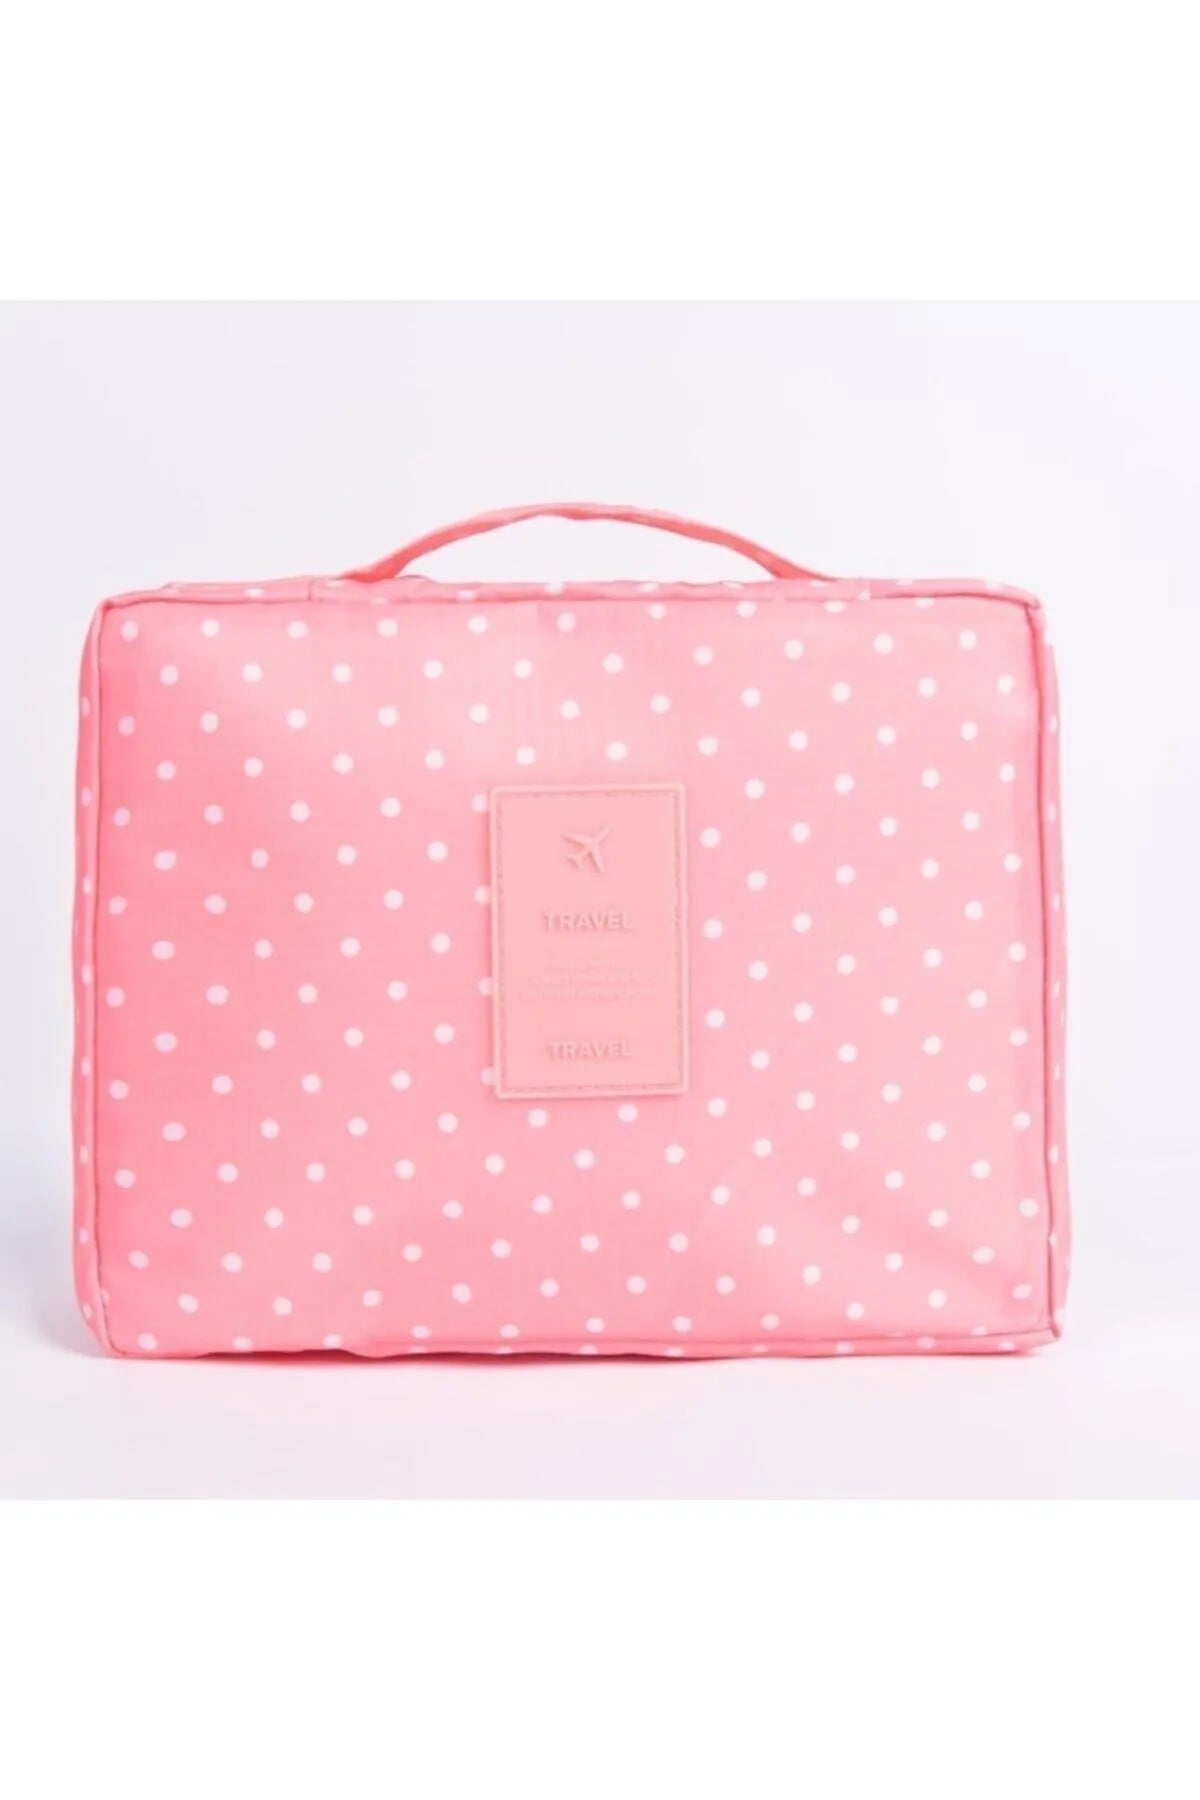 Batekso Women's Pink Polka Dot Pattern Makeup Bag